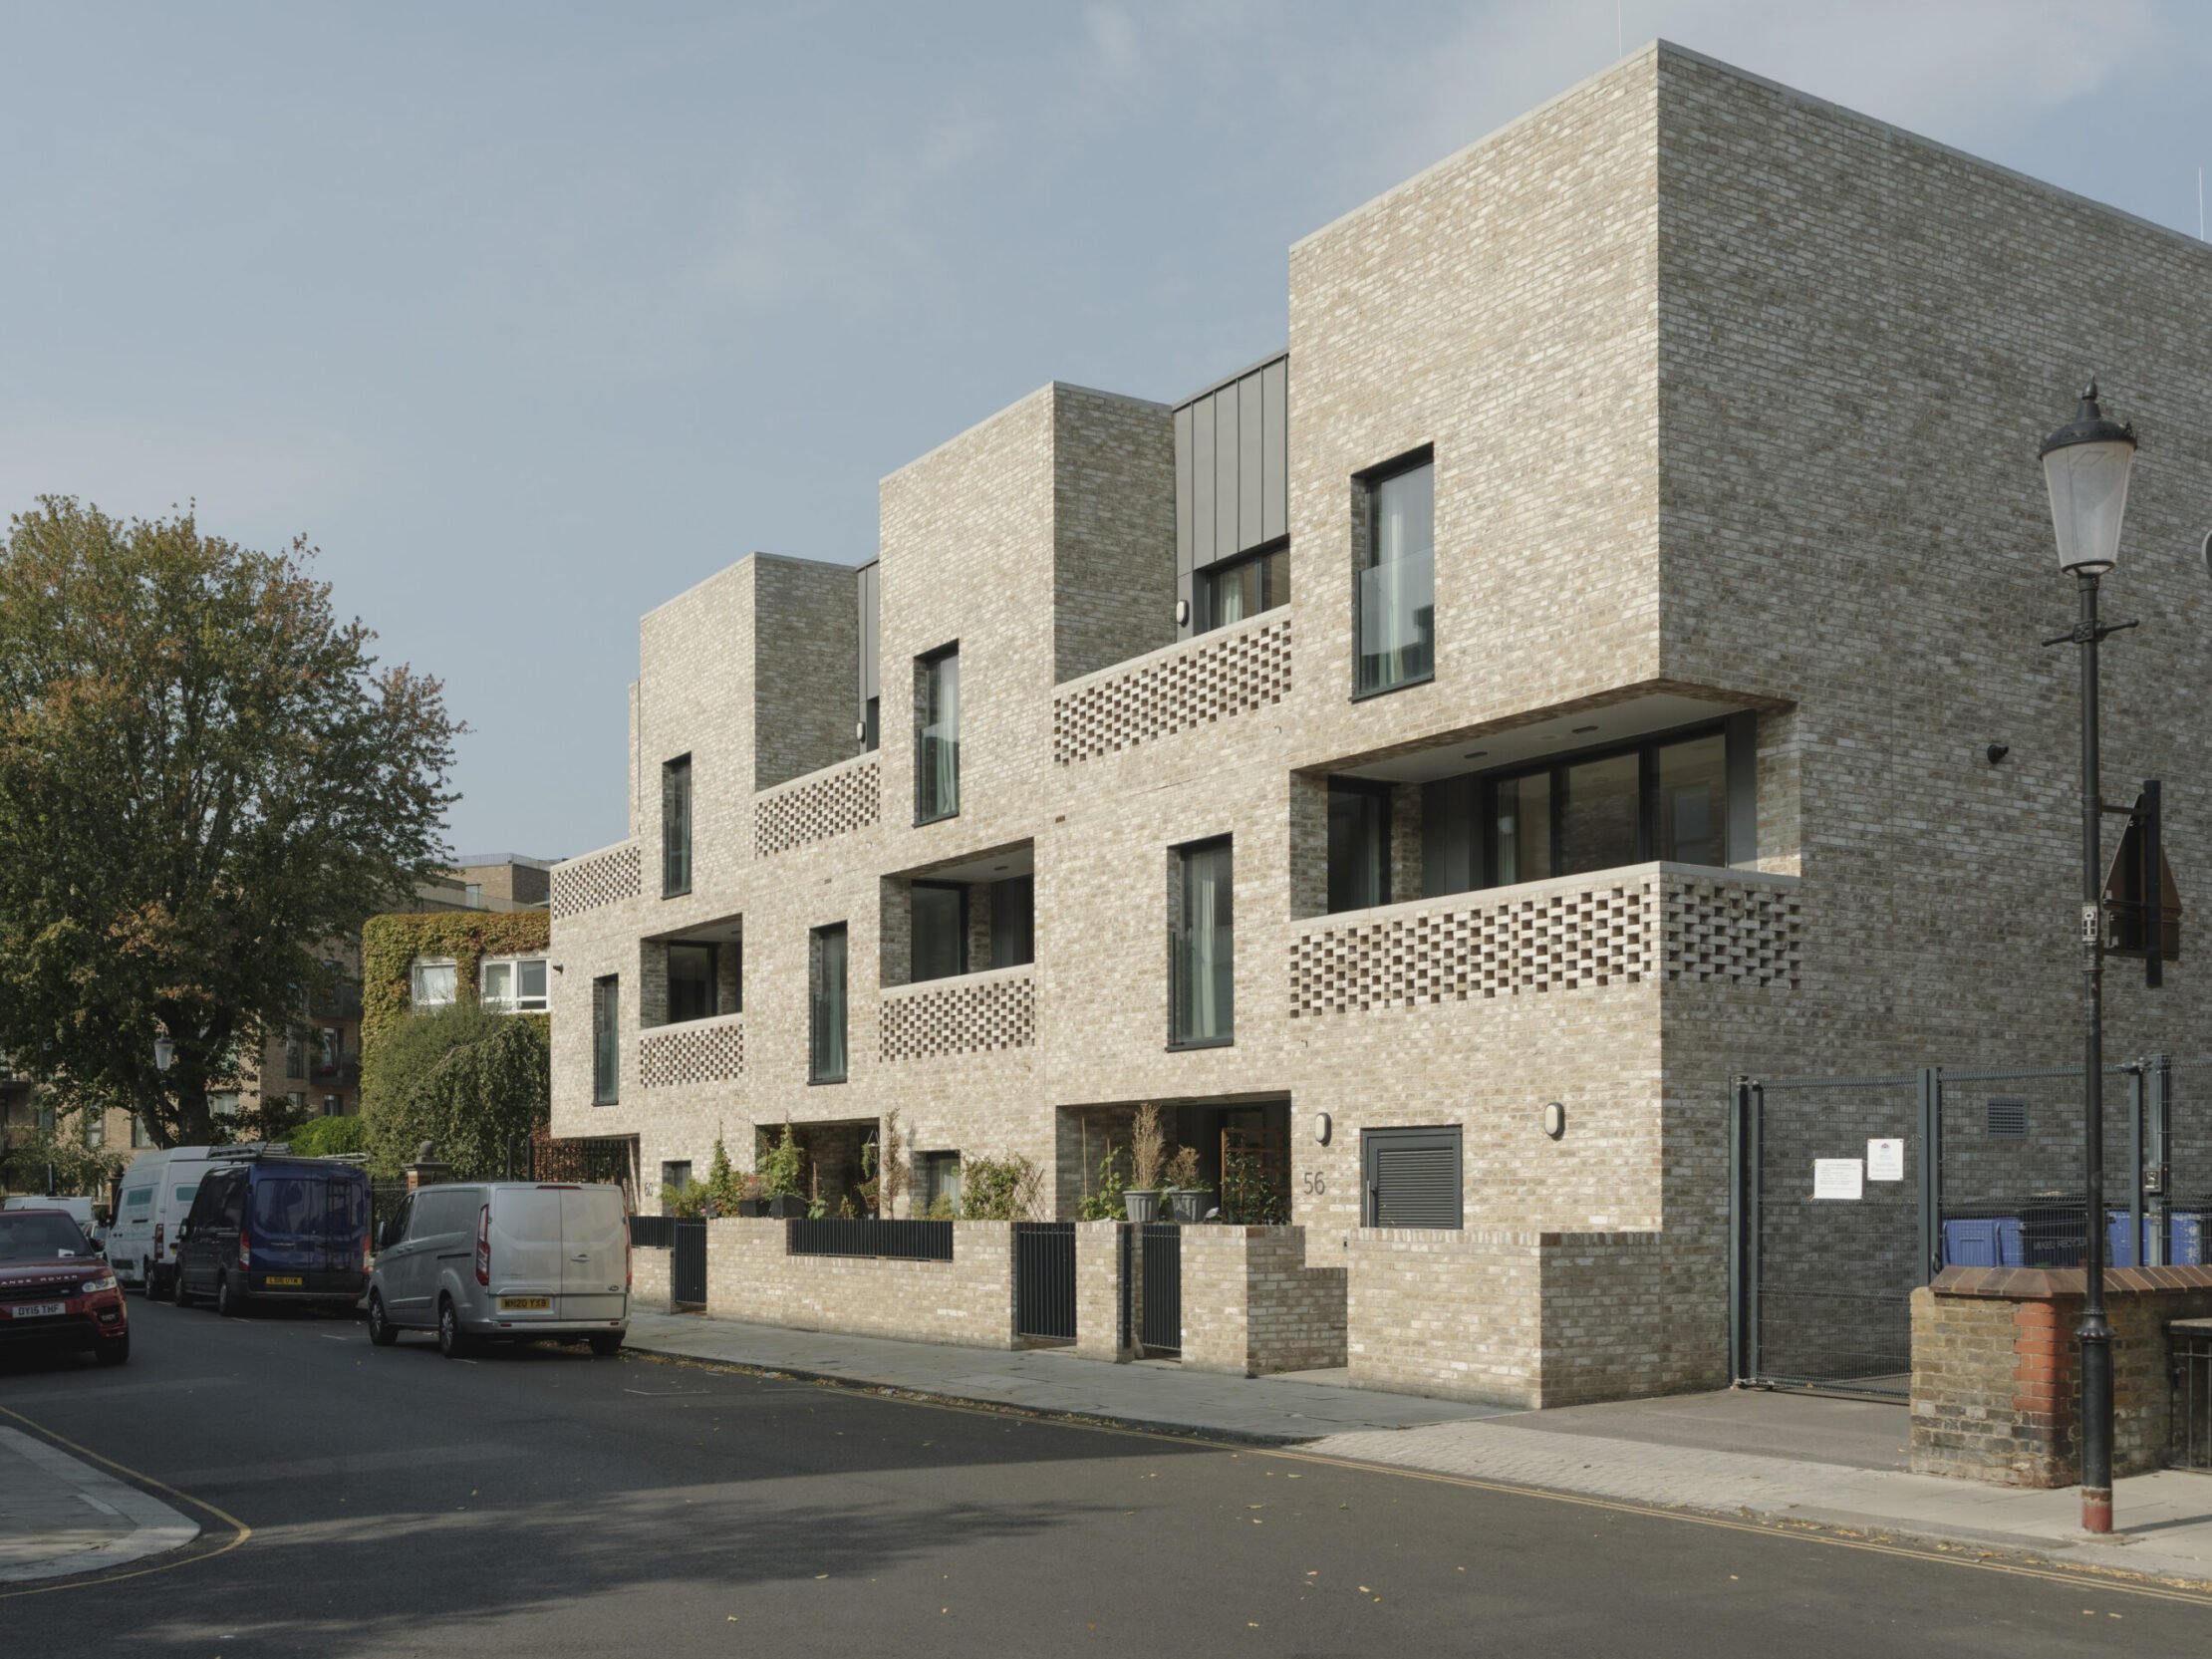 Middle-Row-Housing-Southern-Row-Penoyre-Prasad-Tim-Crocker-scaled-2220x0-c-default.jpg